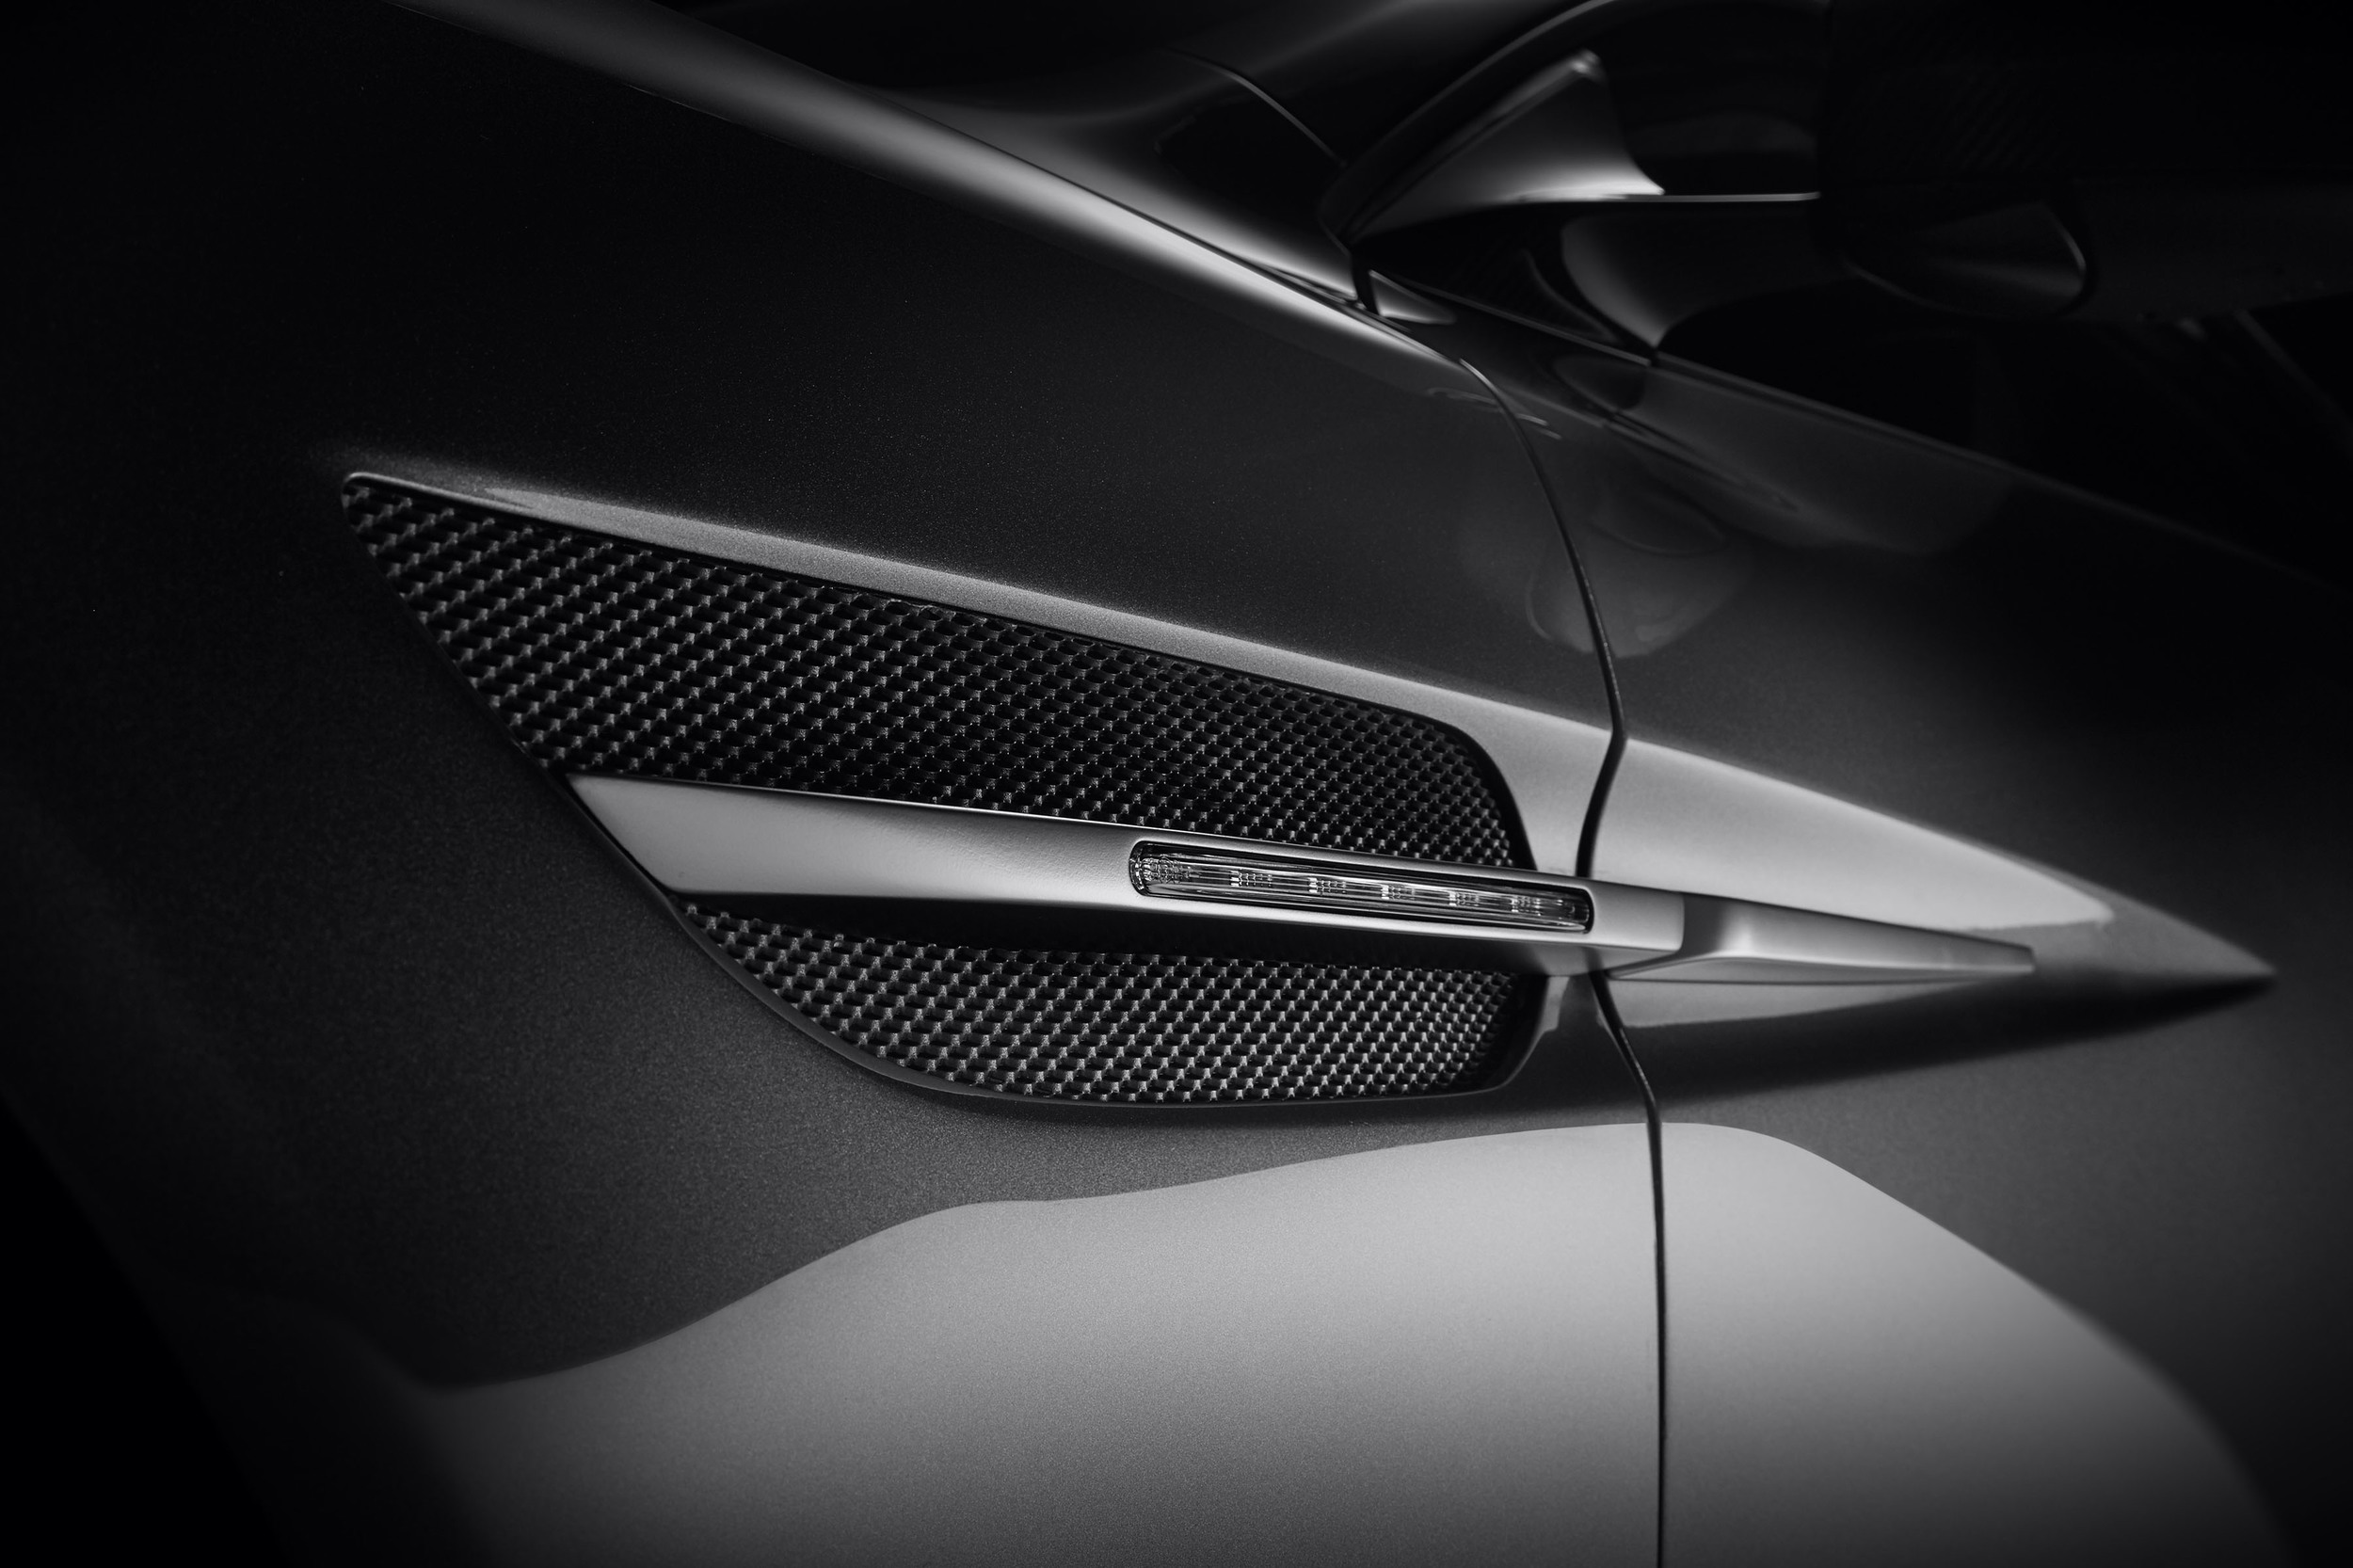 Aston Martin Vanquish V12 'Thunderbolt' (2015): One-Off designed by Henrik Fisker